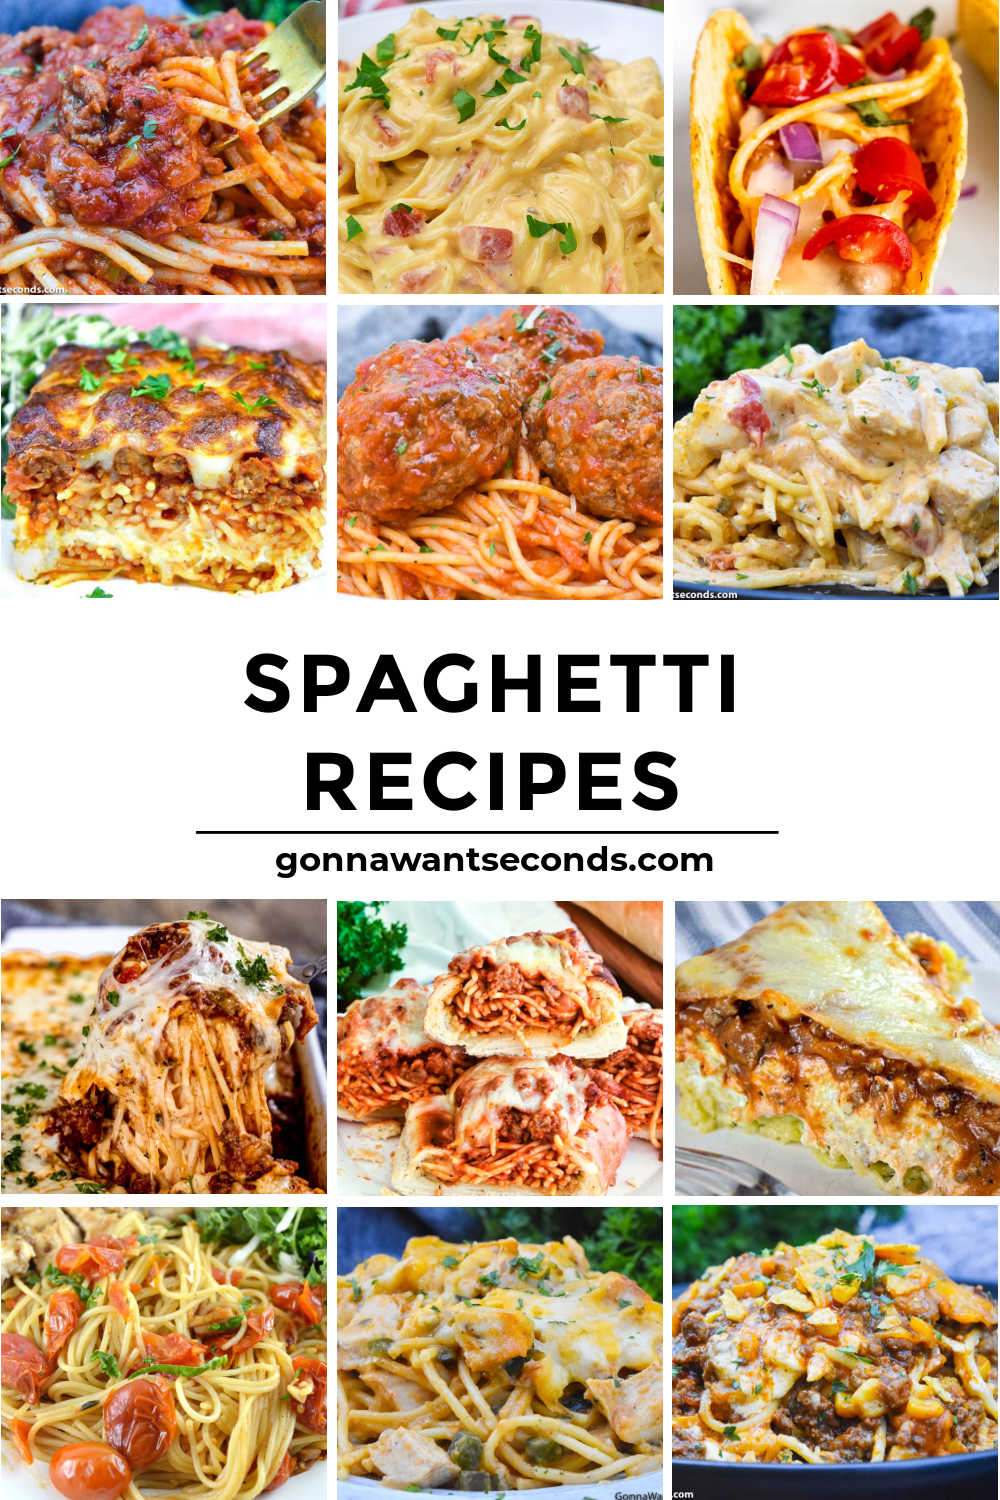 Spaghetti recipes montage